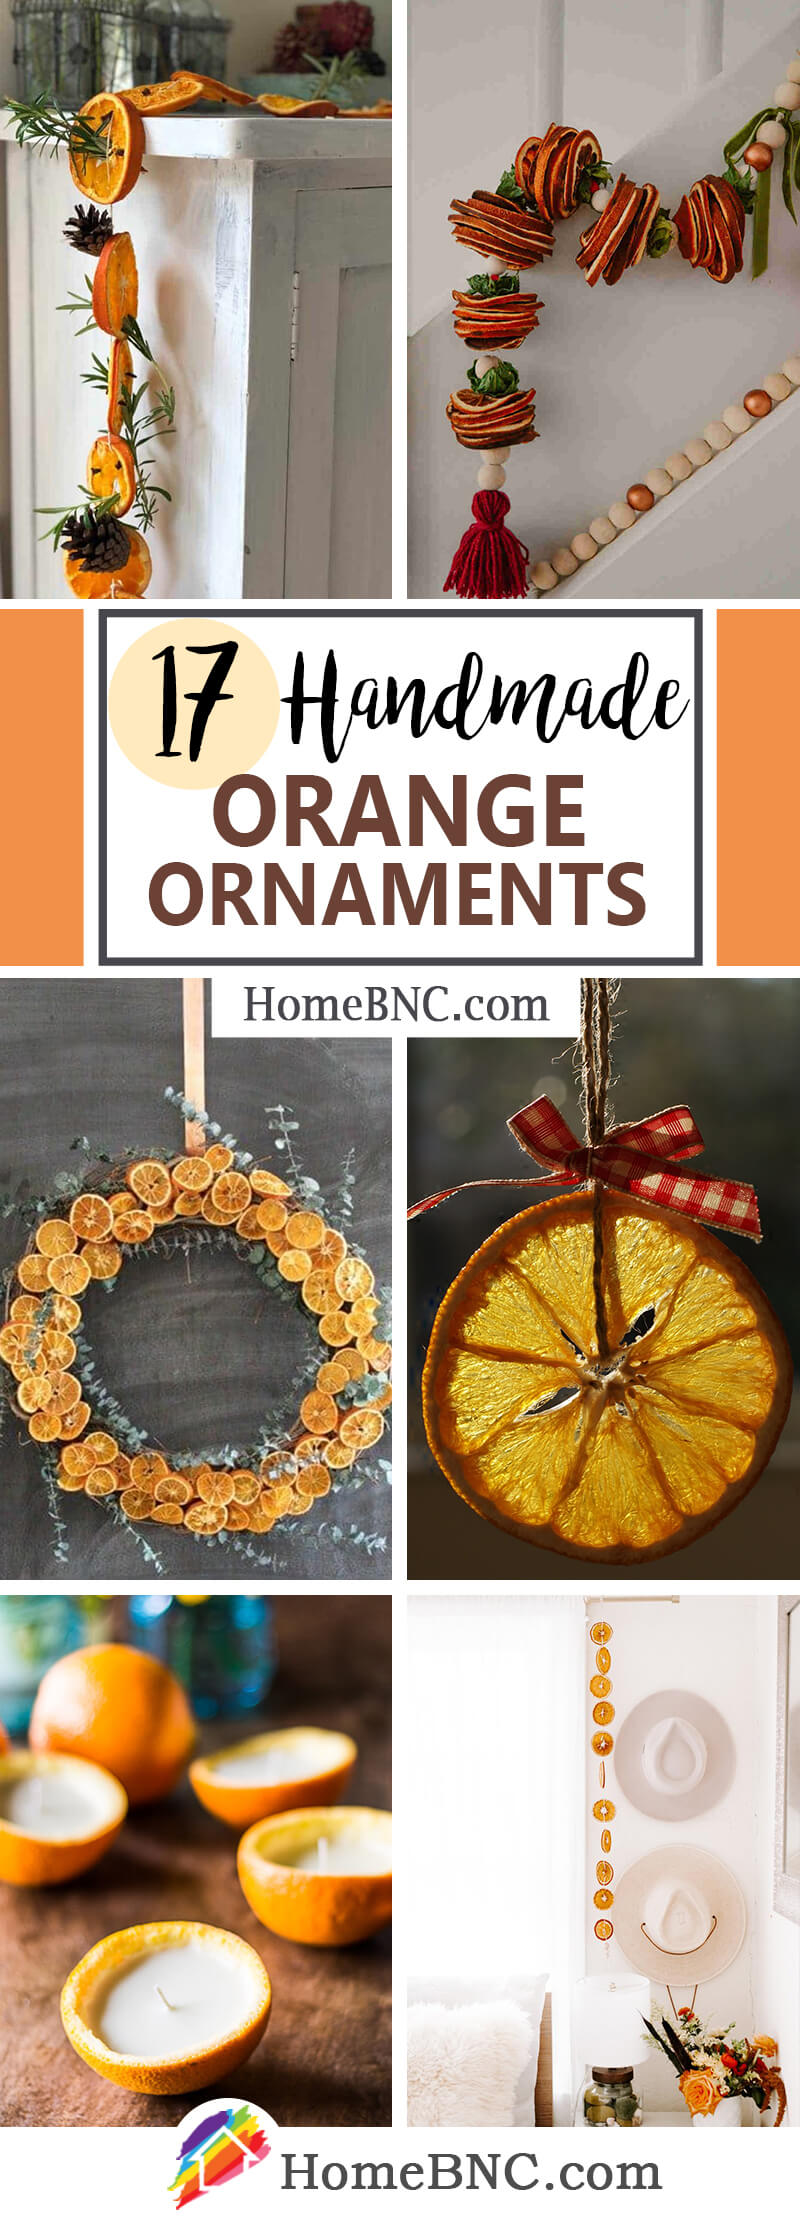 Best Orange Ornaments